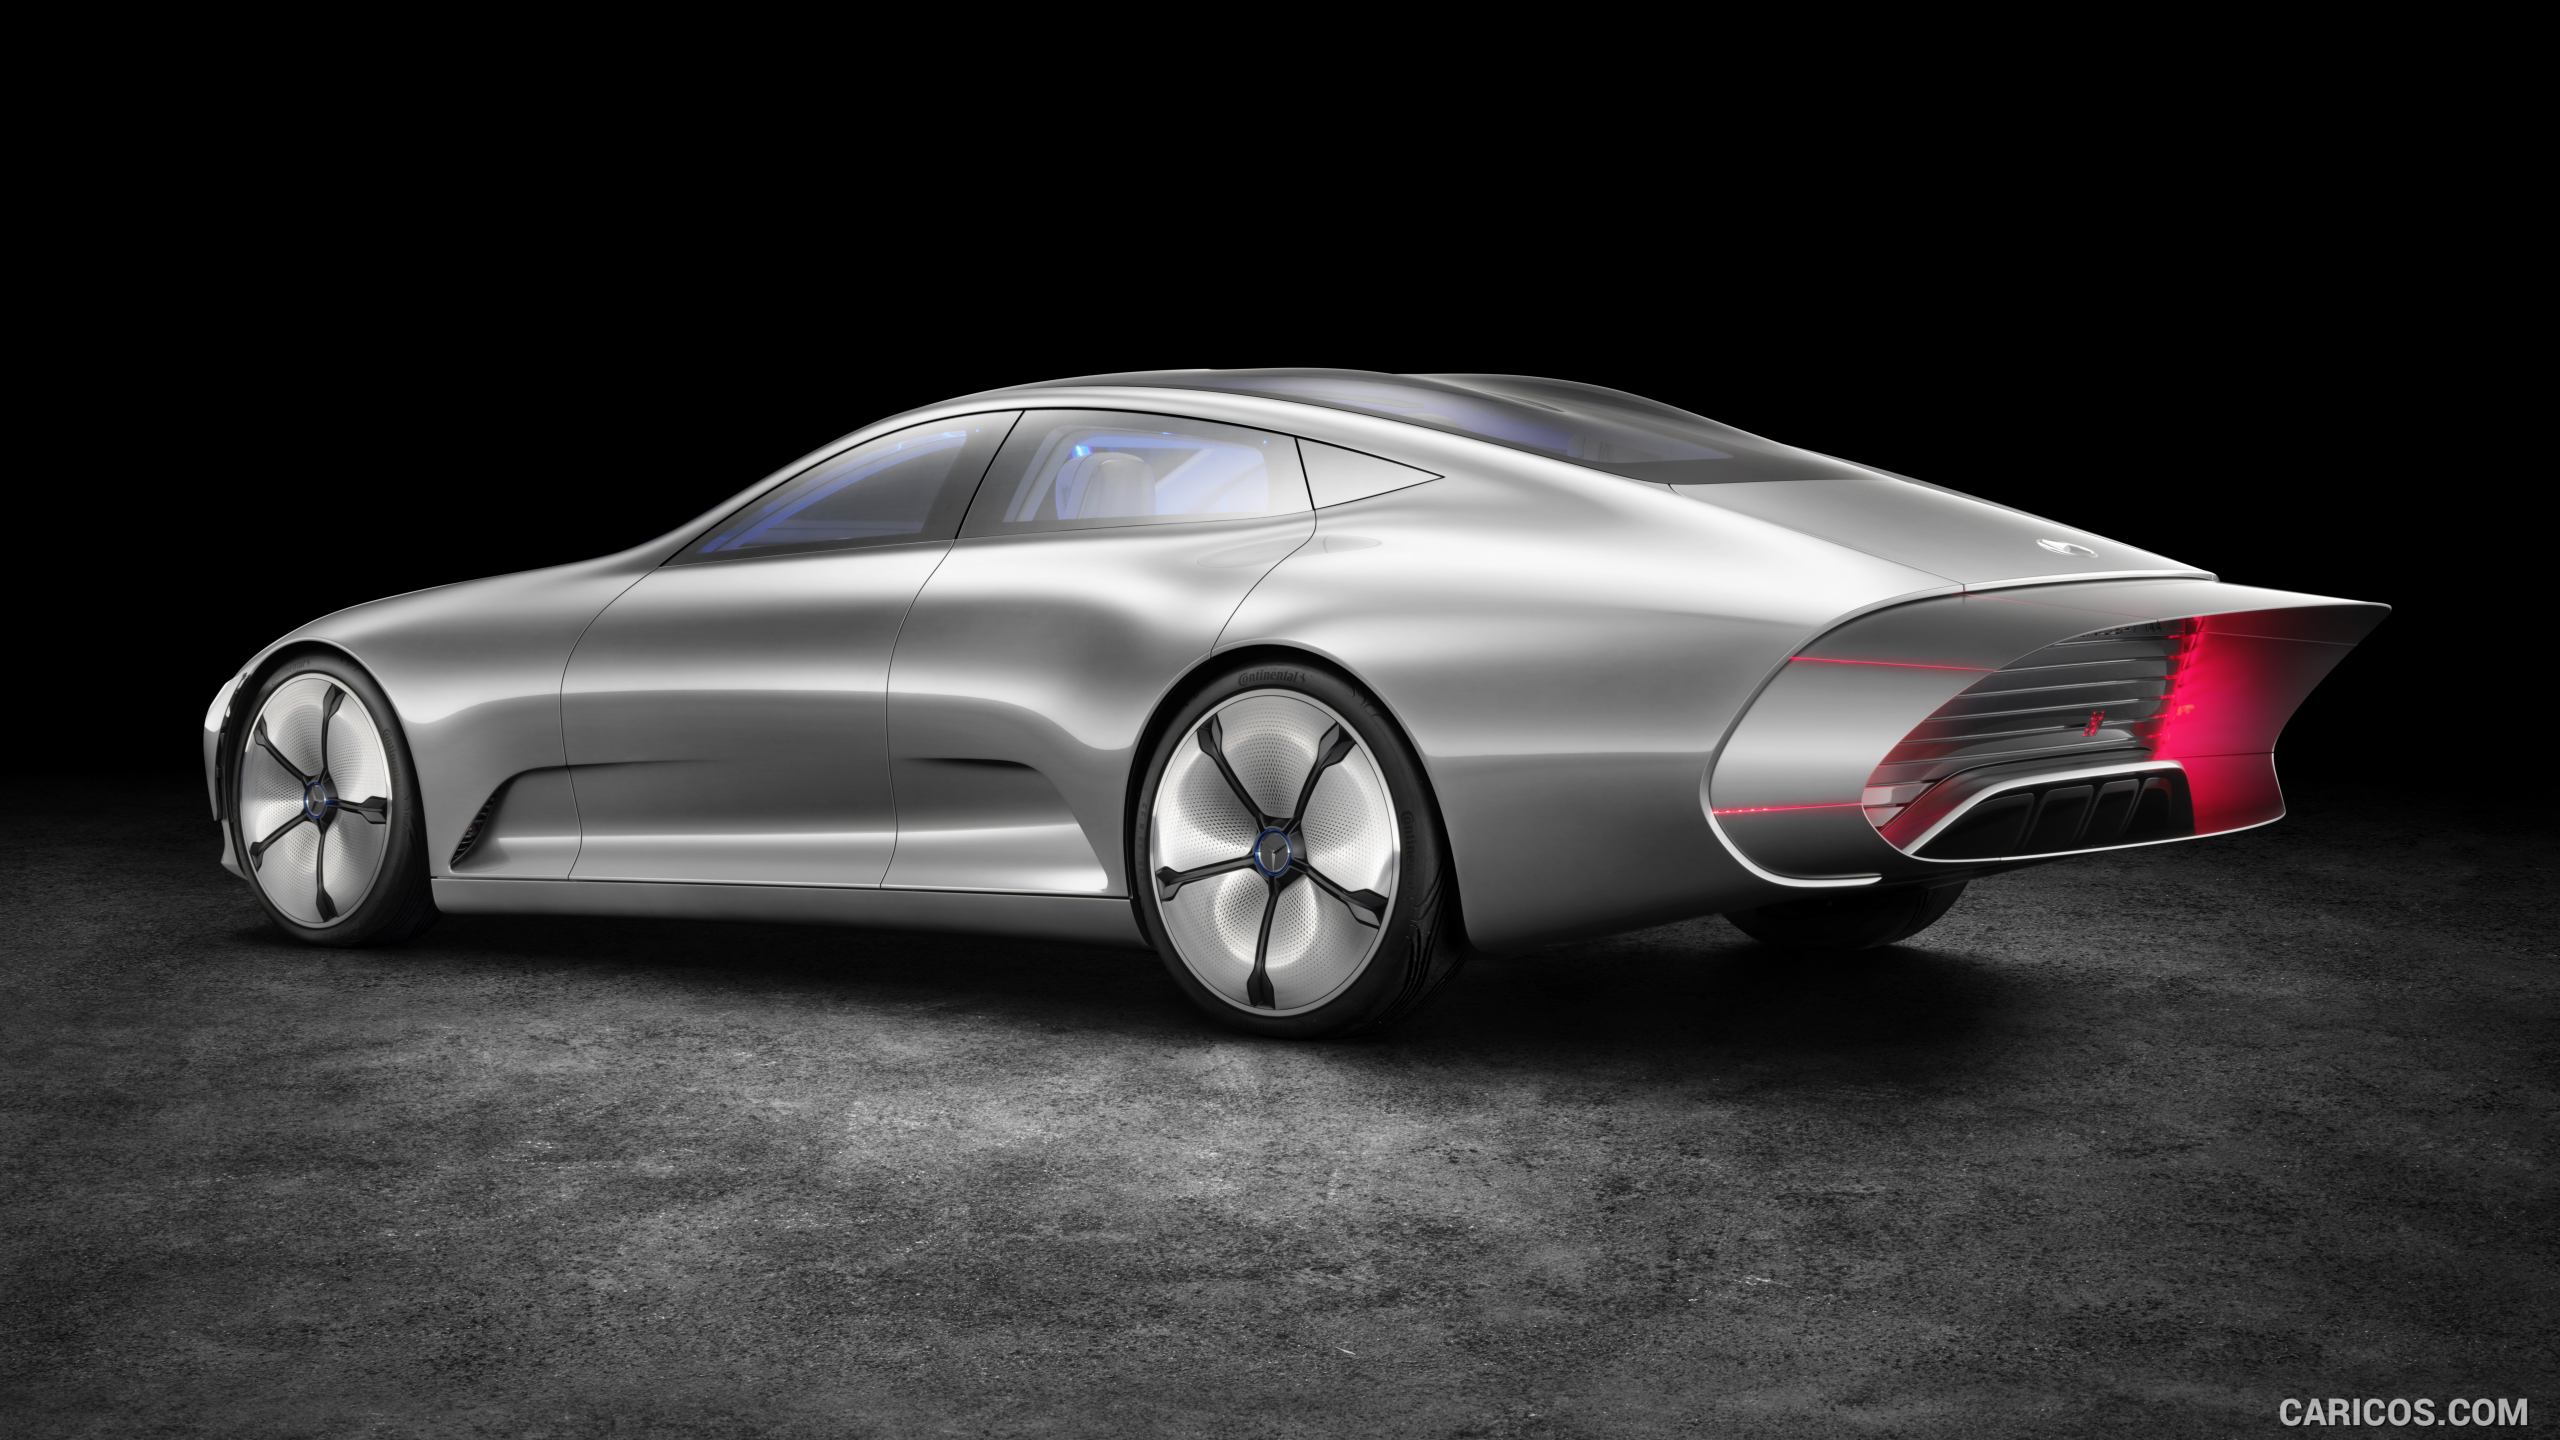 2015 Mercedes-Benz Concept IAA (Intelligent Aerodynamic Automobile) - Side, #24 of 49